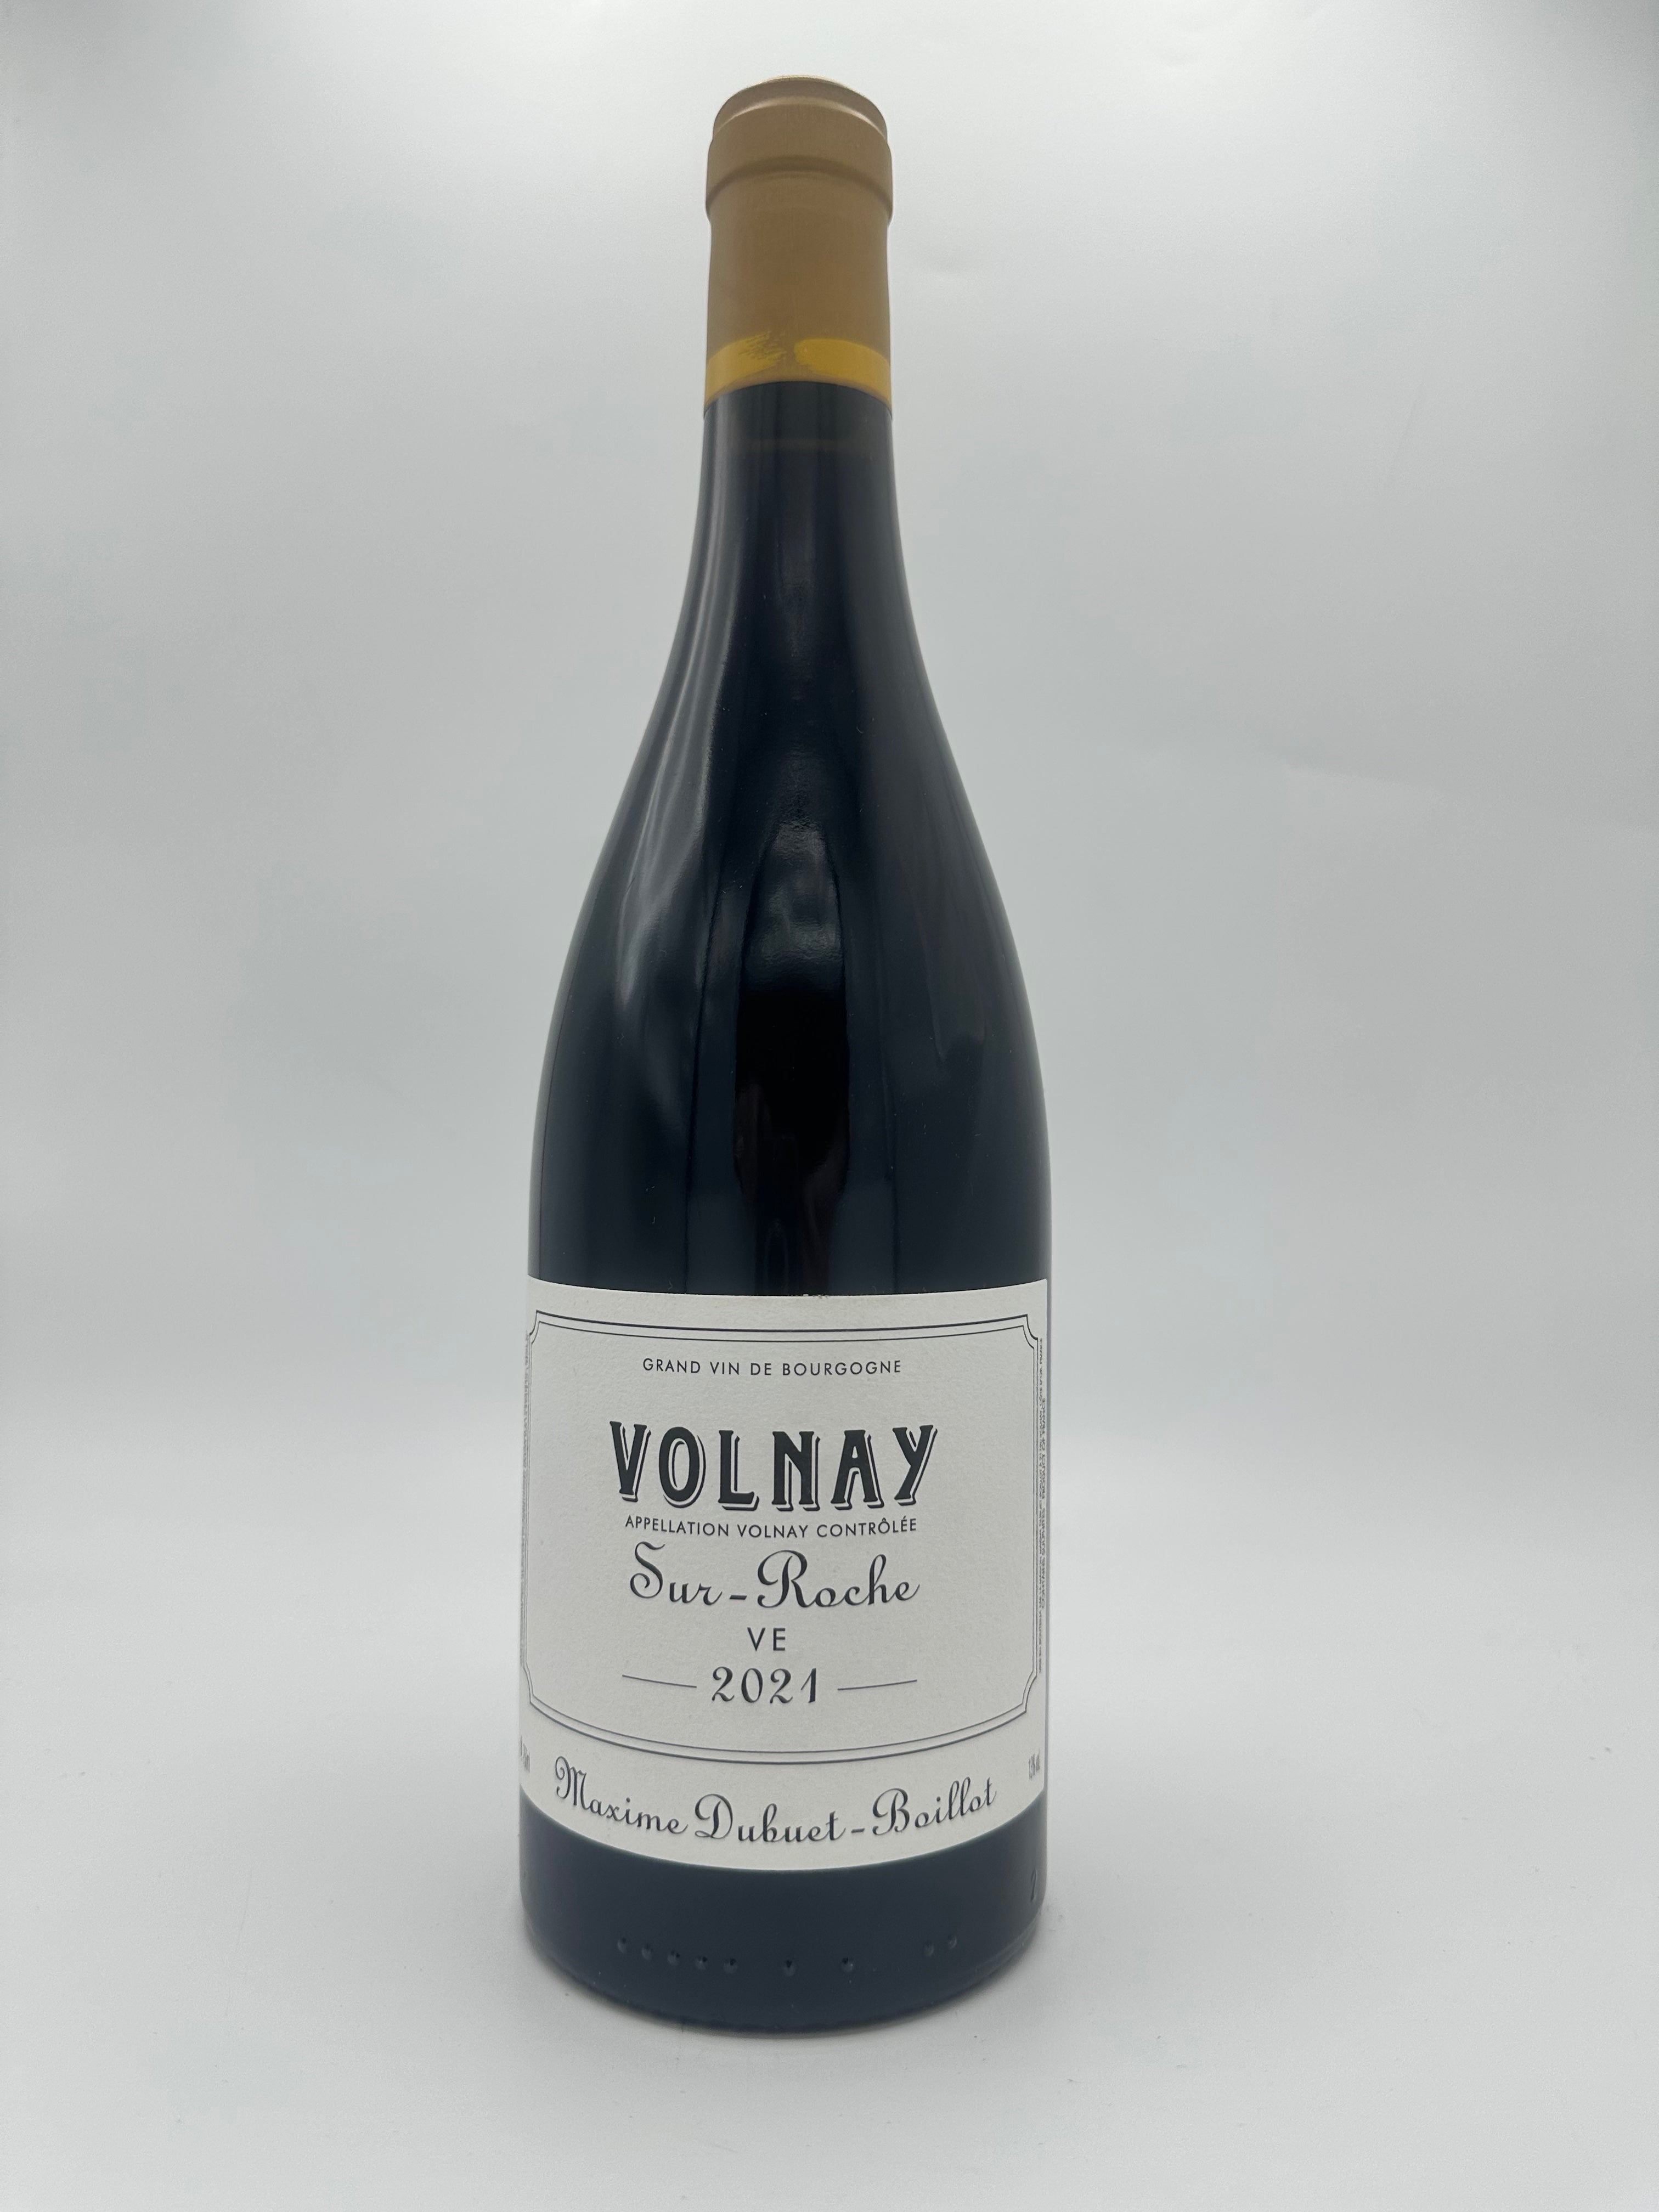 Volnay "Sur Roche" 2021 Rouge - Maxime Dubuet Boillot